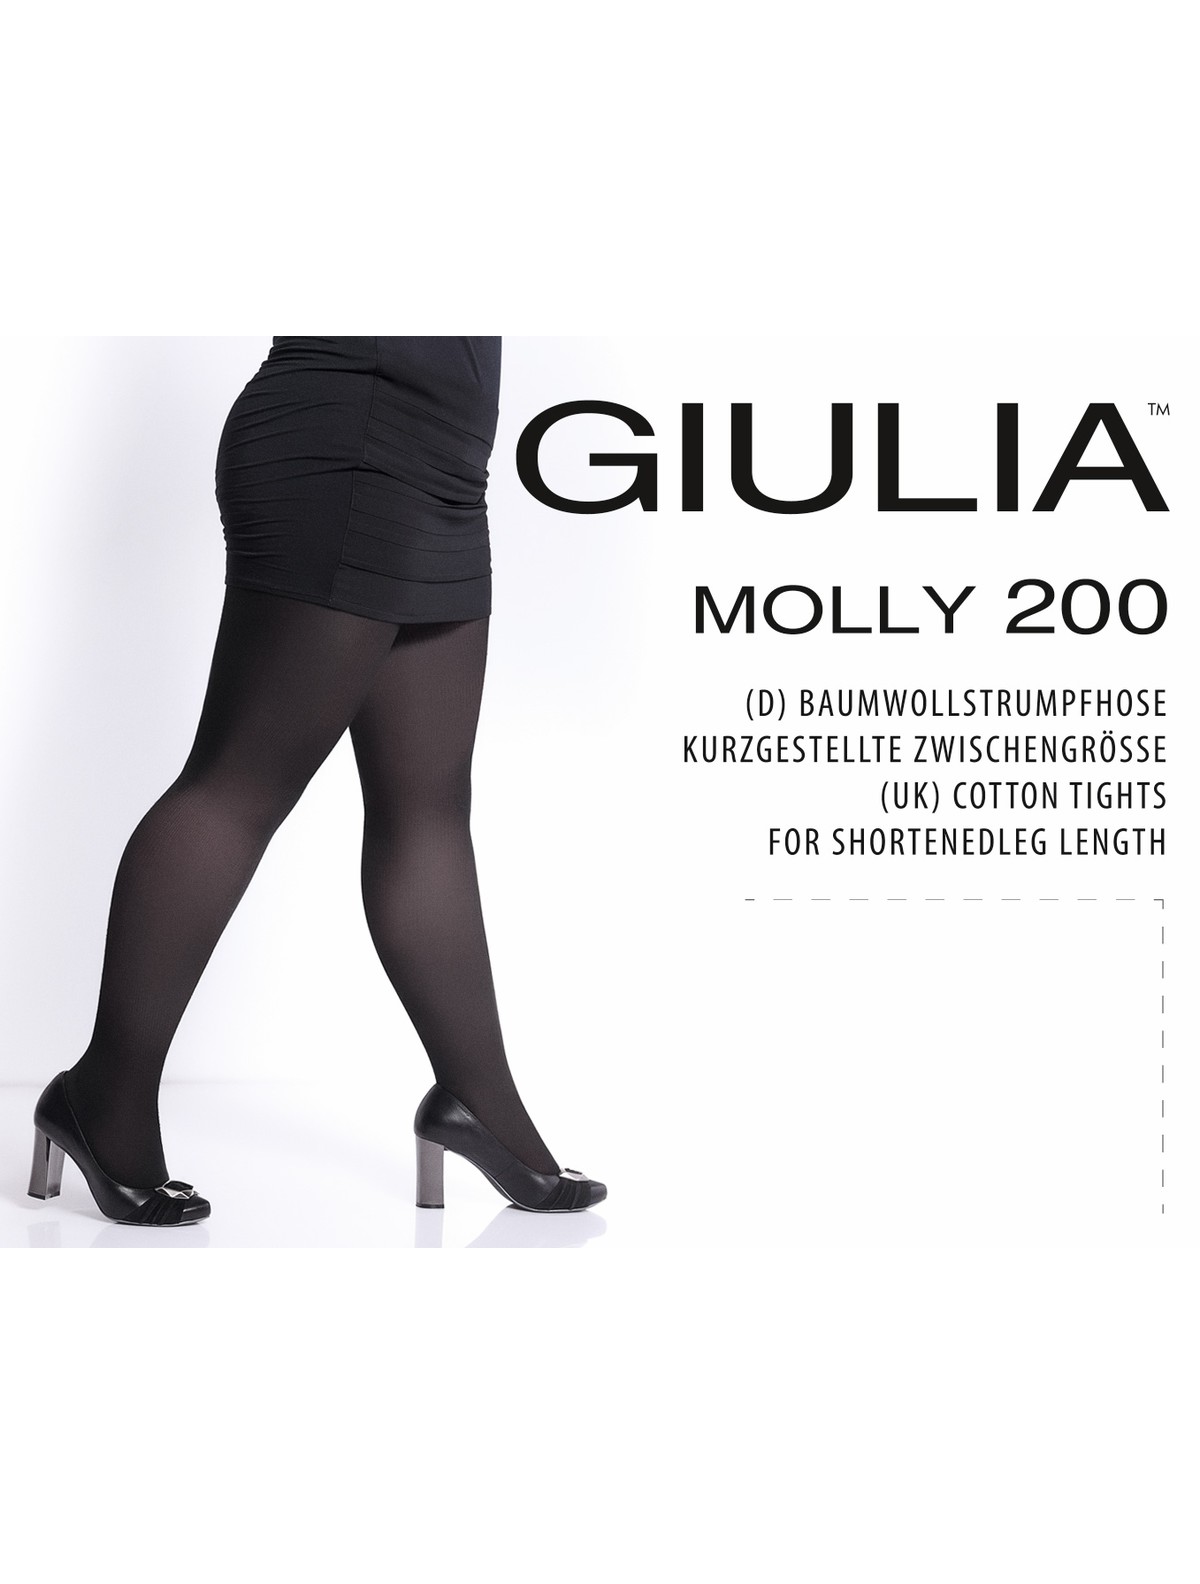 Giulia Molly 200 Plus Size Knit Cotton Tights